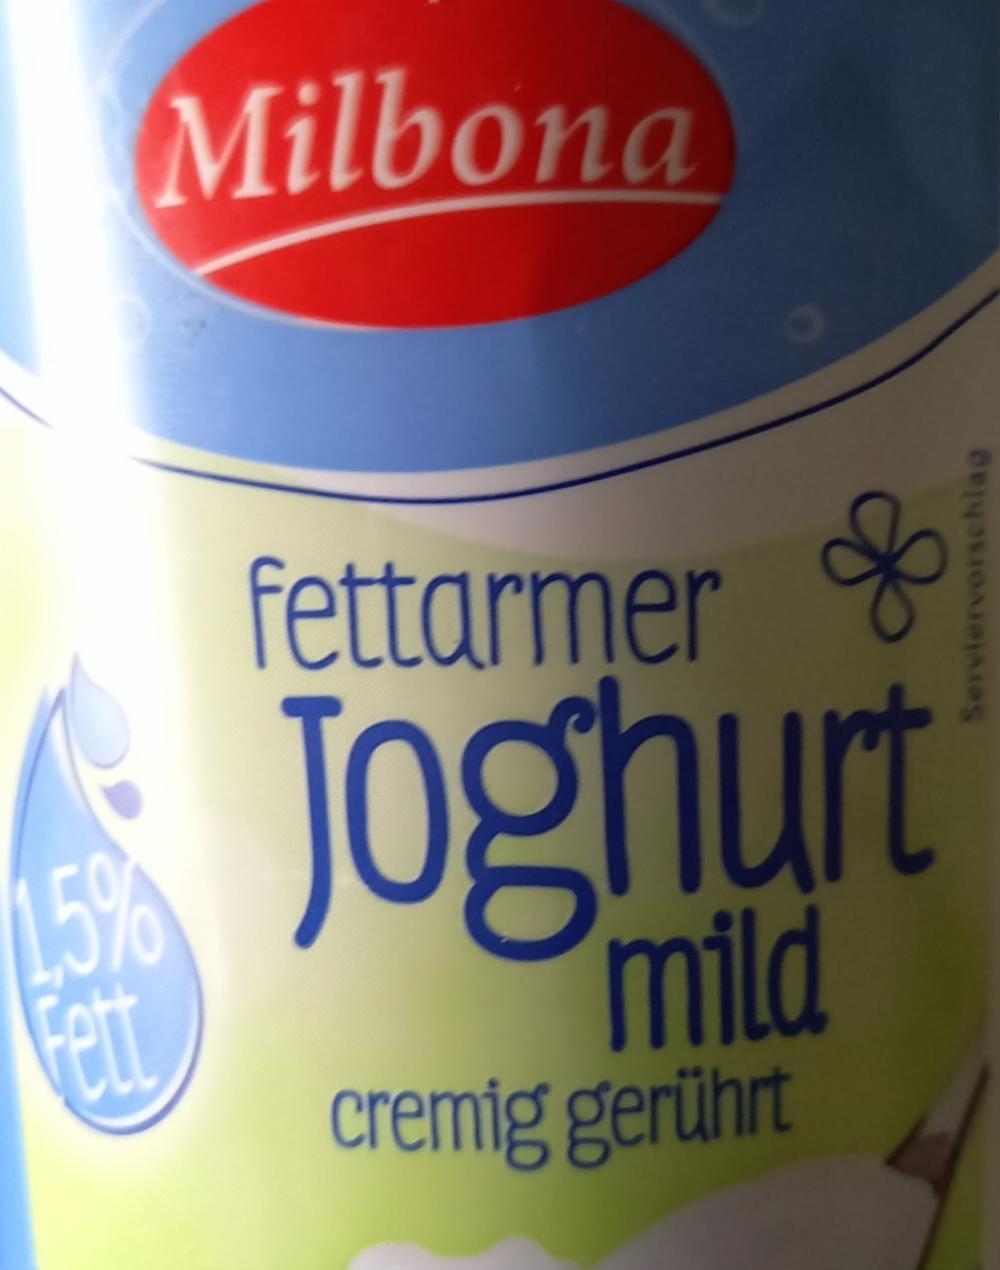 Zdjęcia - Fettarmer Joghurt mild 1.5% Milbona